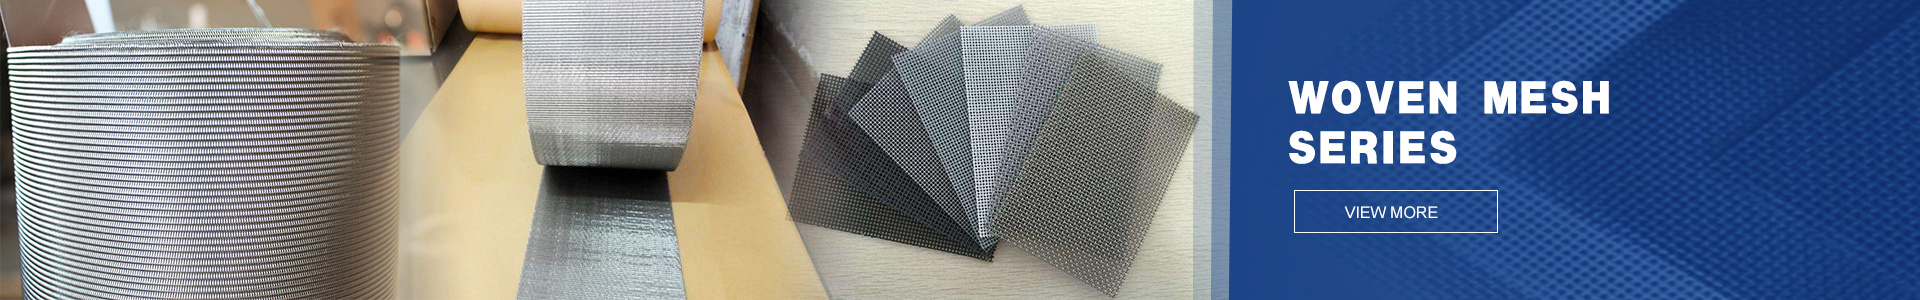 woven mesh series